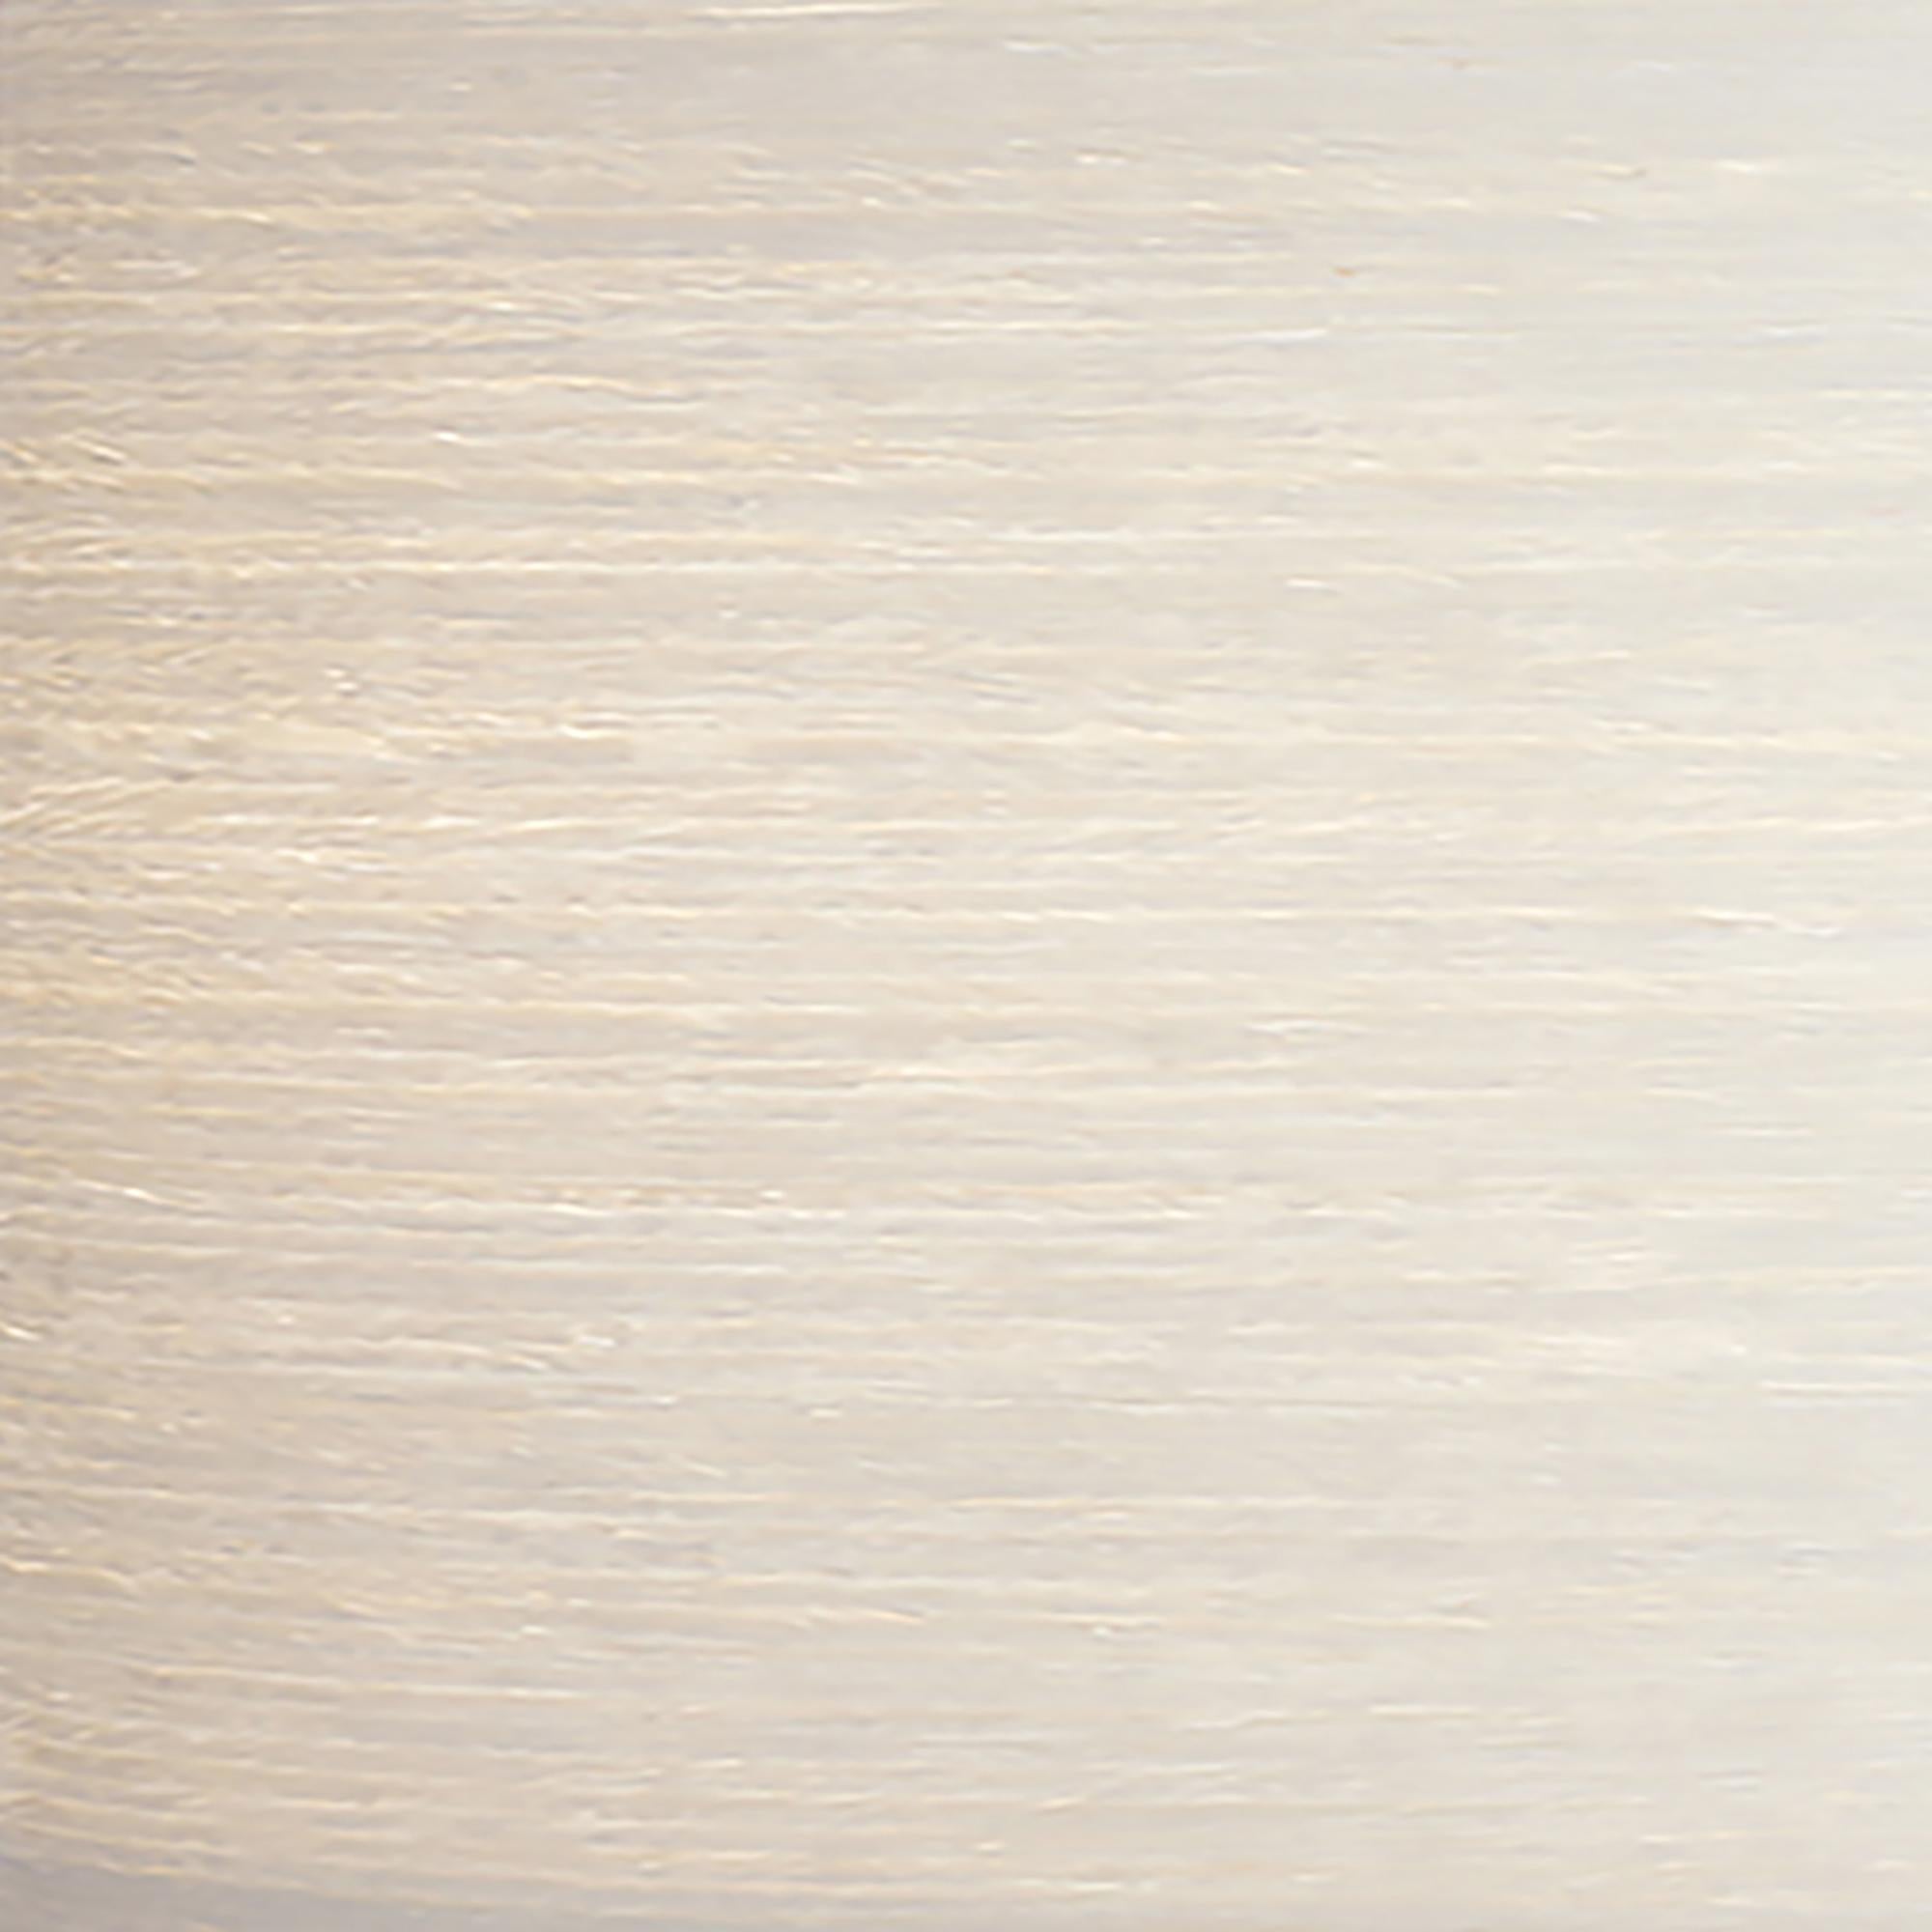 Organic Modern Scandinavian Modern White Wood Veneer Shade with Brushed Brass Stand